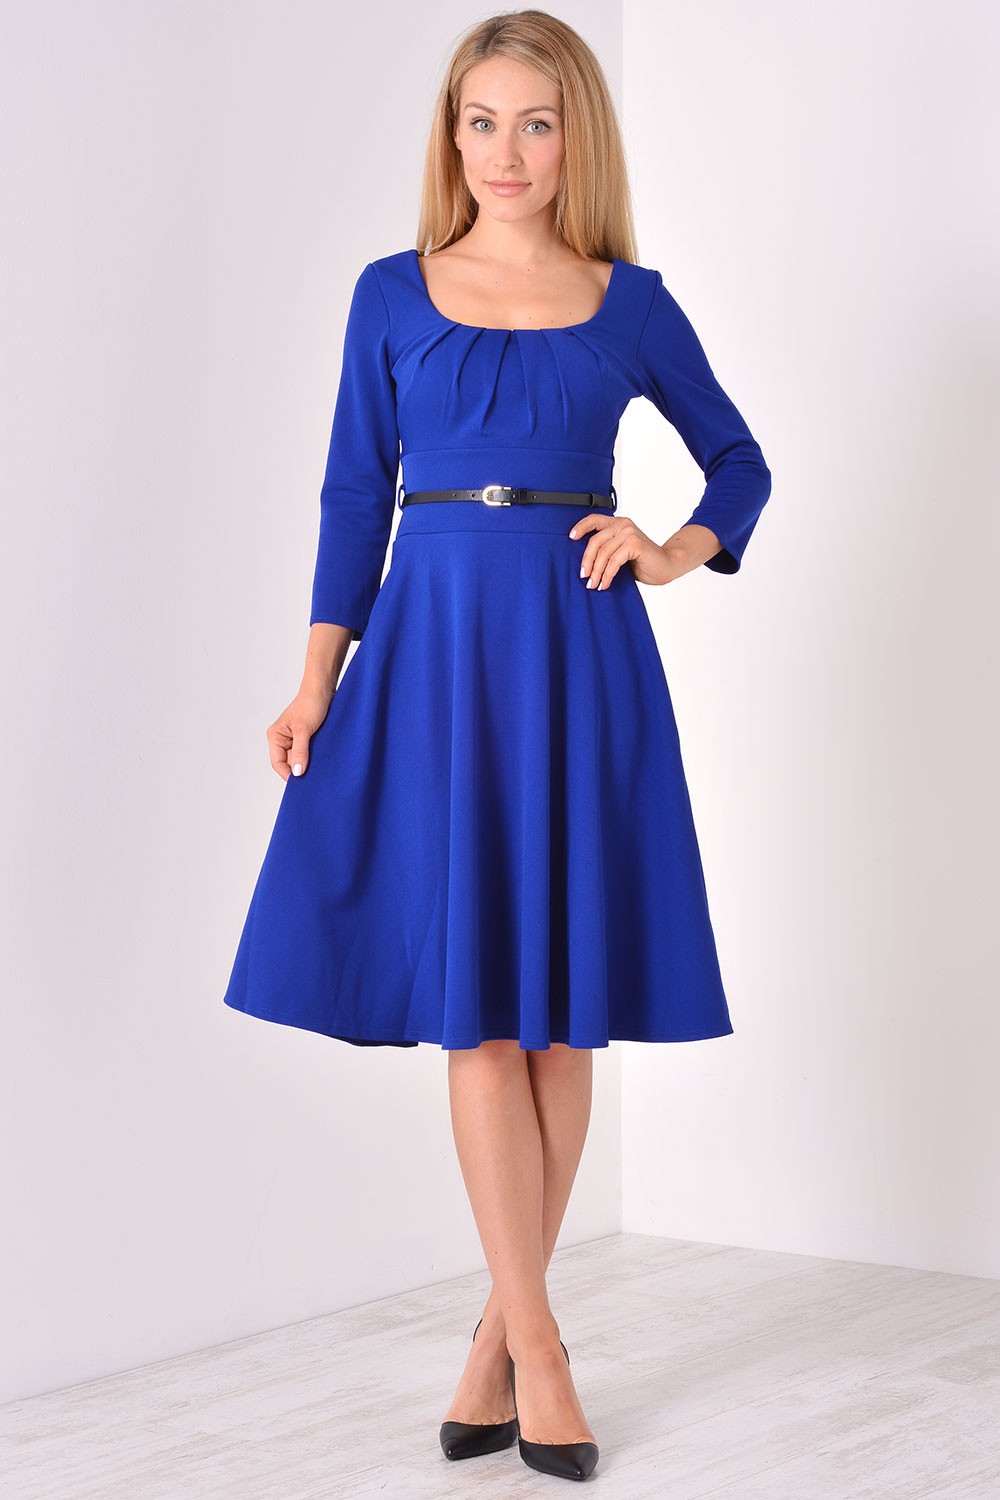 Goddiva Flavia Full Skirt Midi Dress With Belt in Blue | iCLOTHING